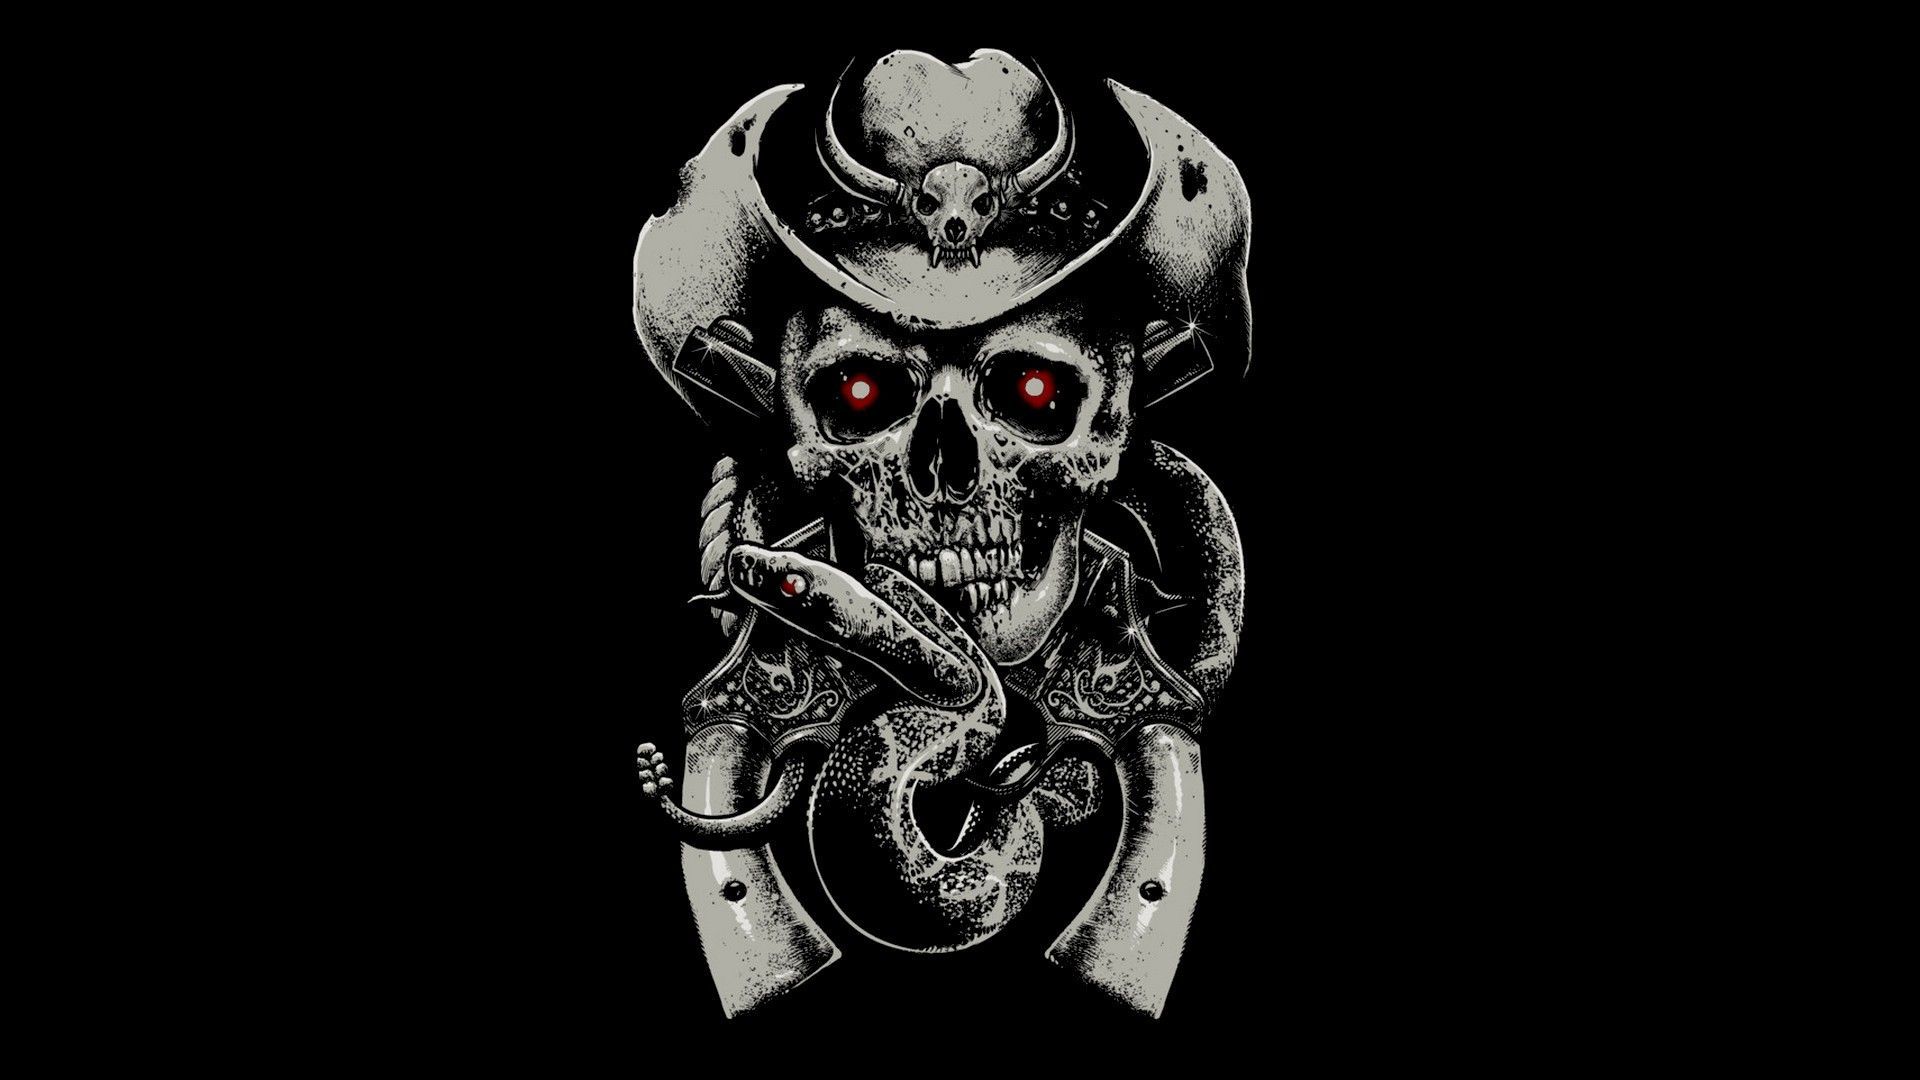 download wallpaper 1920x1080 skull fear hat guns snake